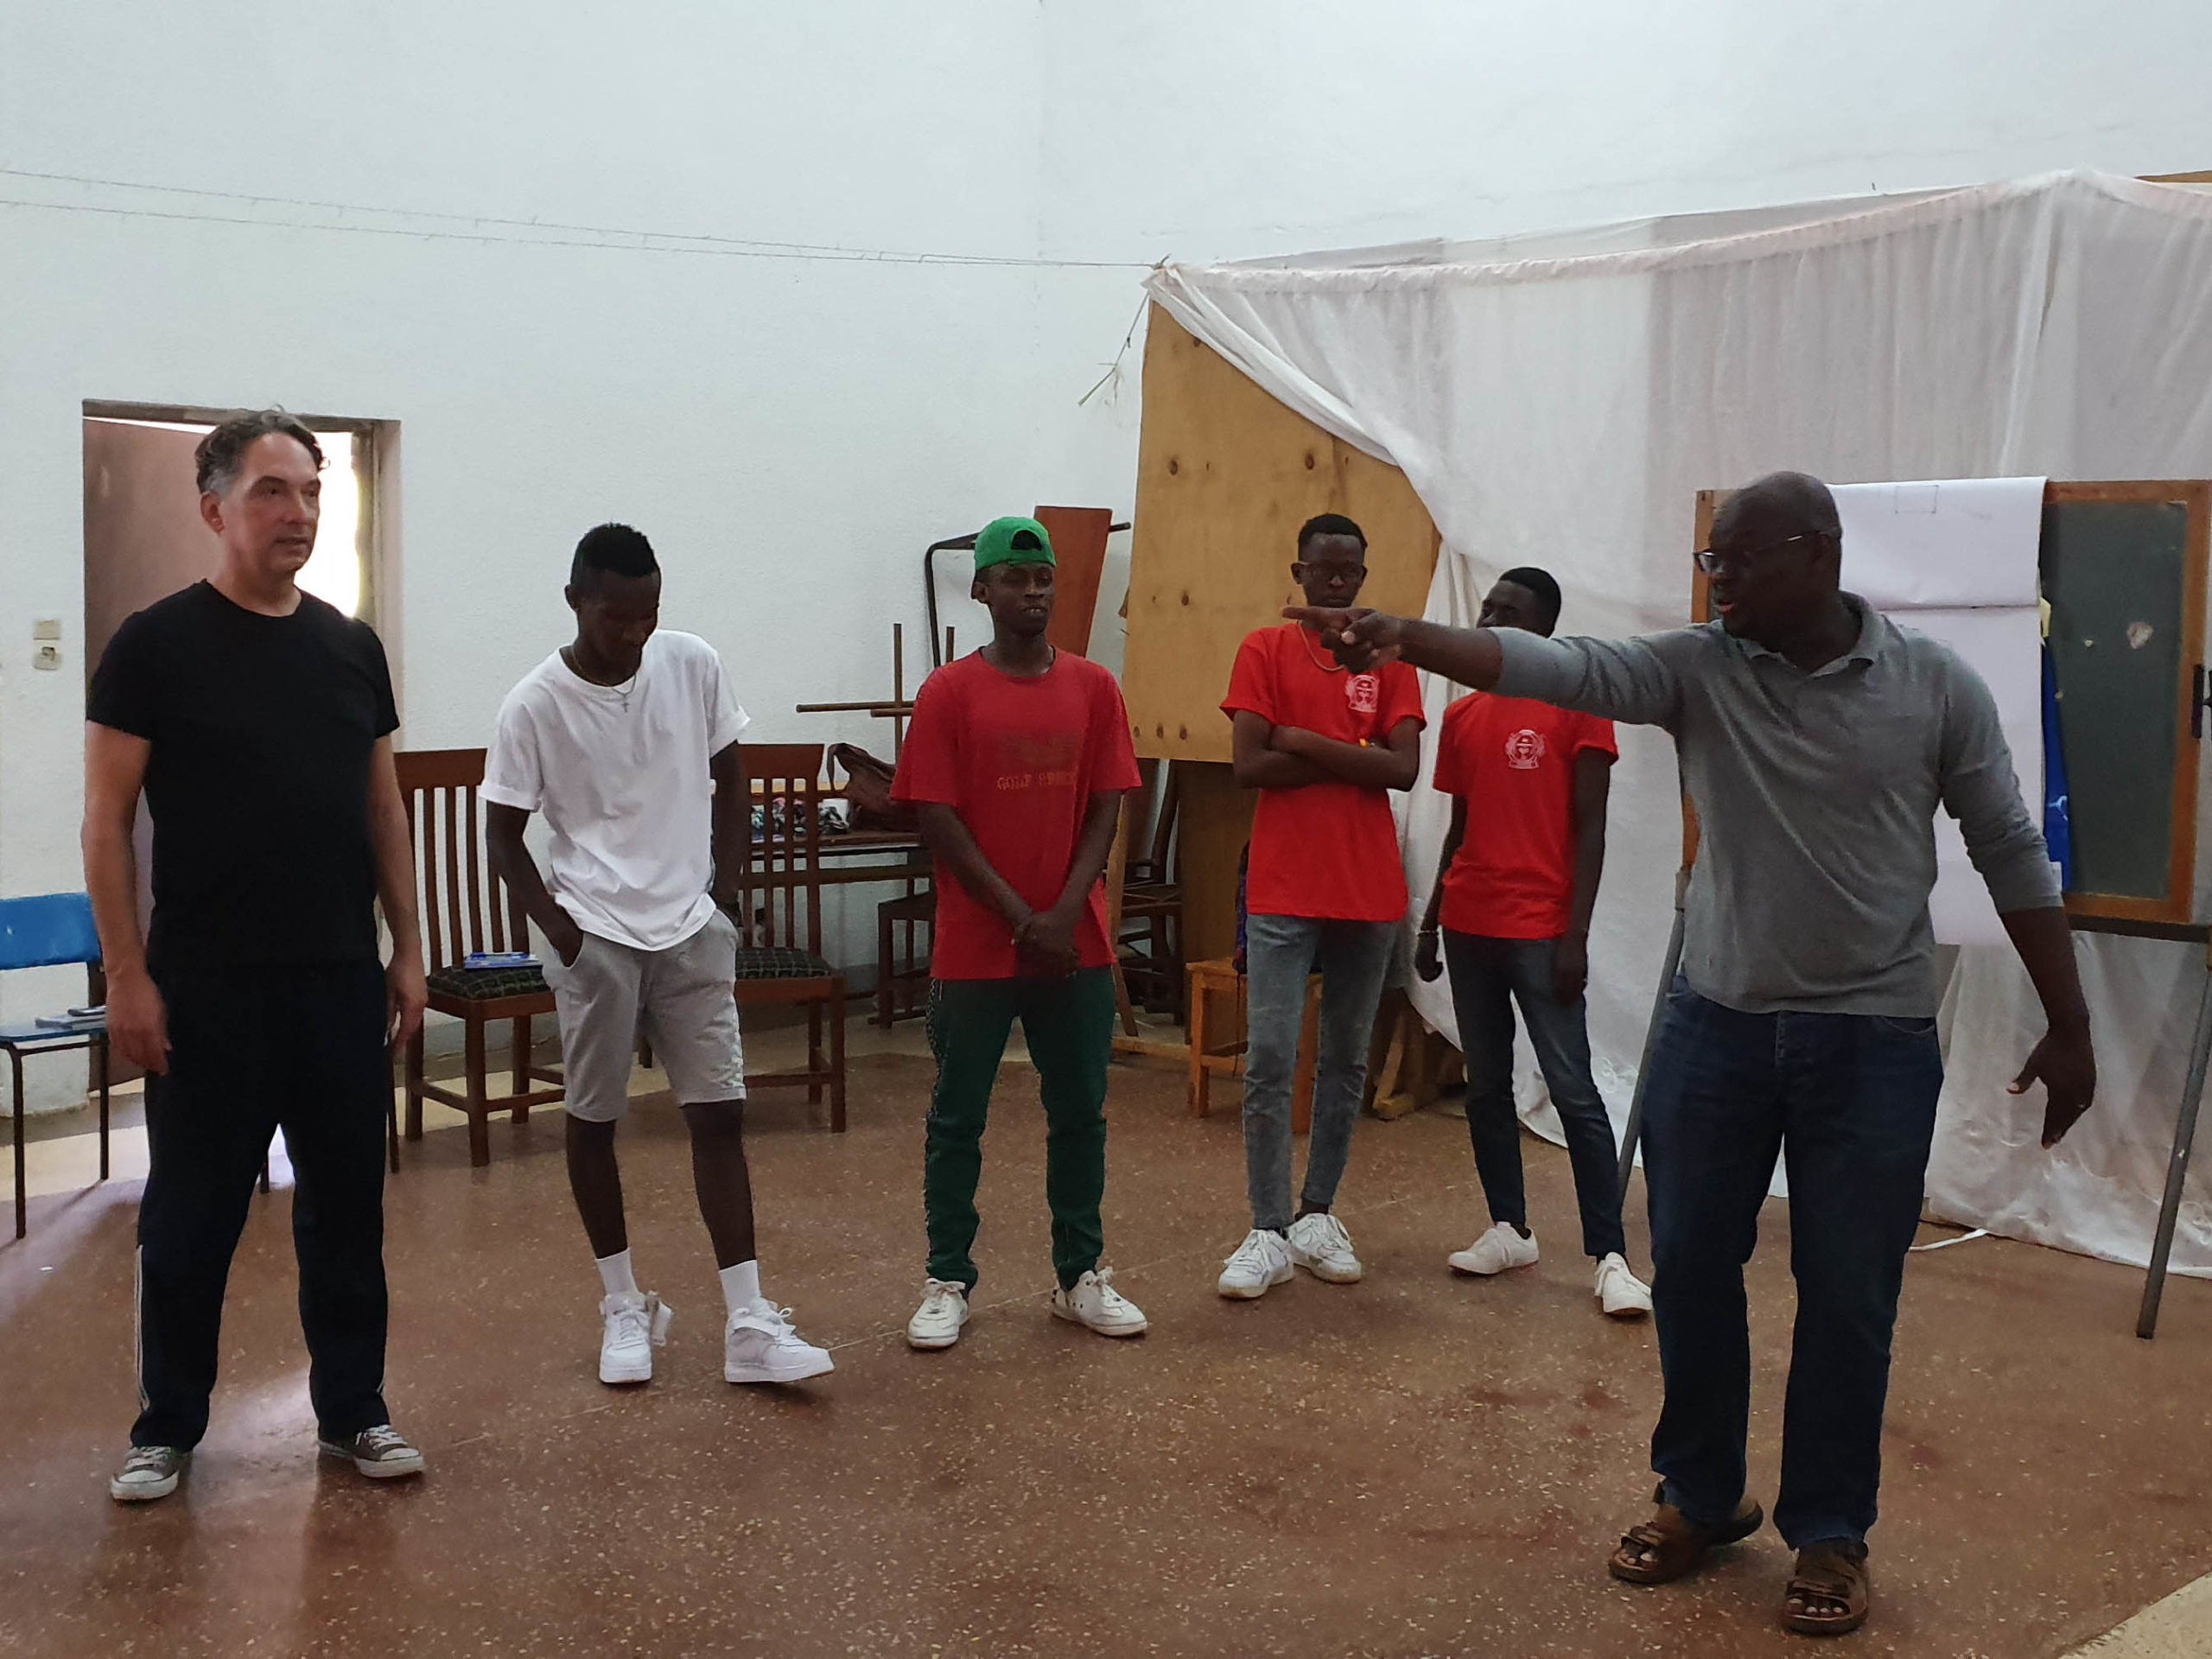 Cre8 East Africa Train de Trainer Rwanda Kigali 2019